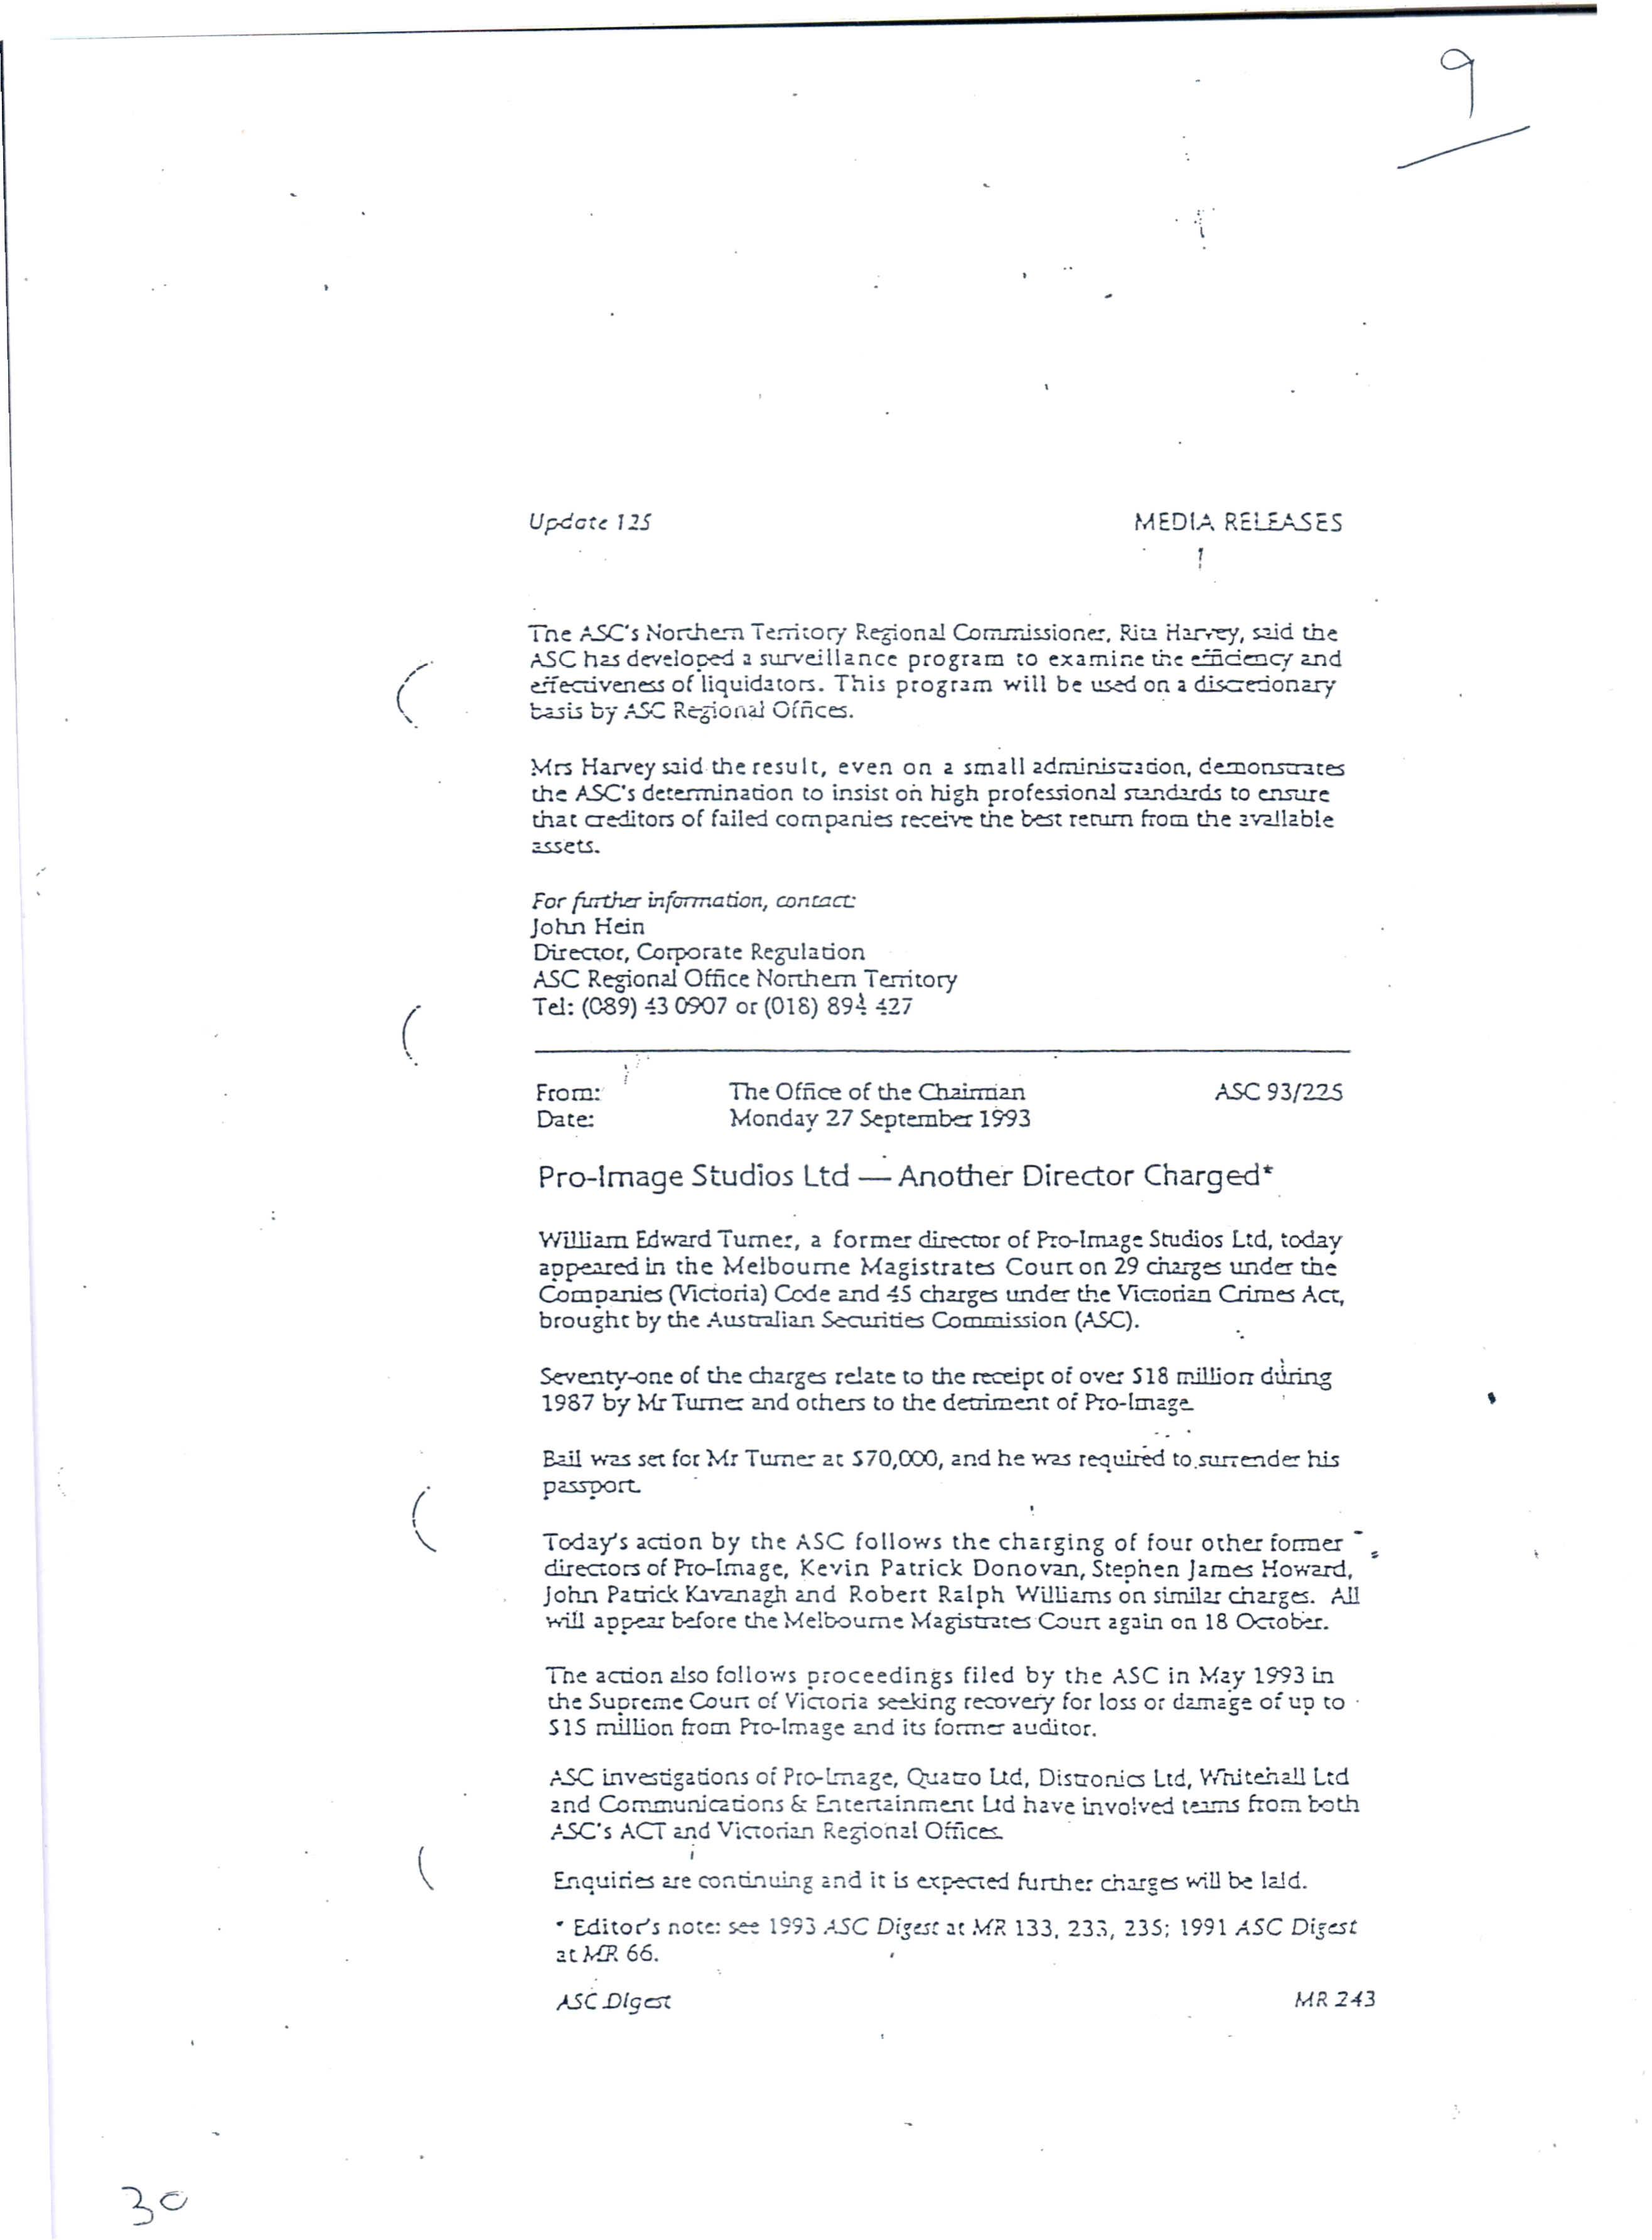 Australian securities Commision media Release 27 September 1993